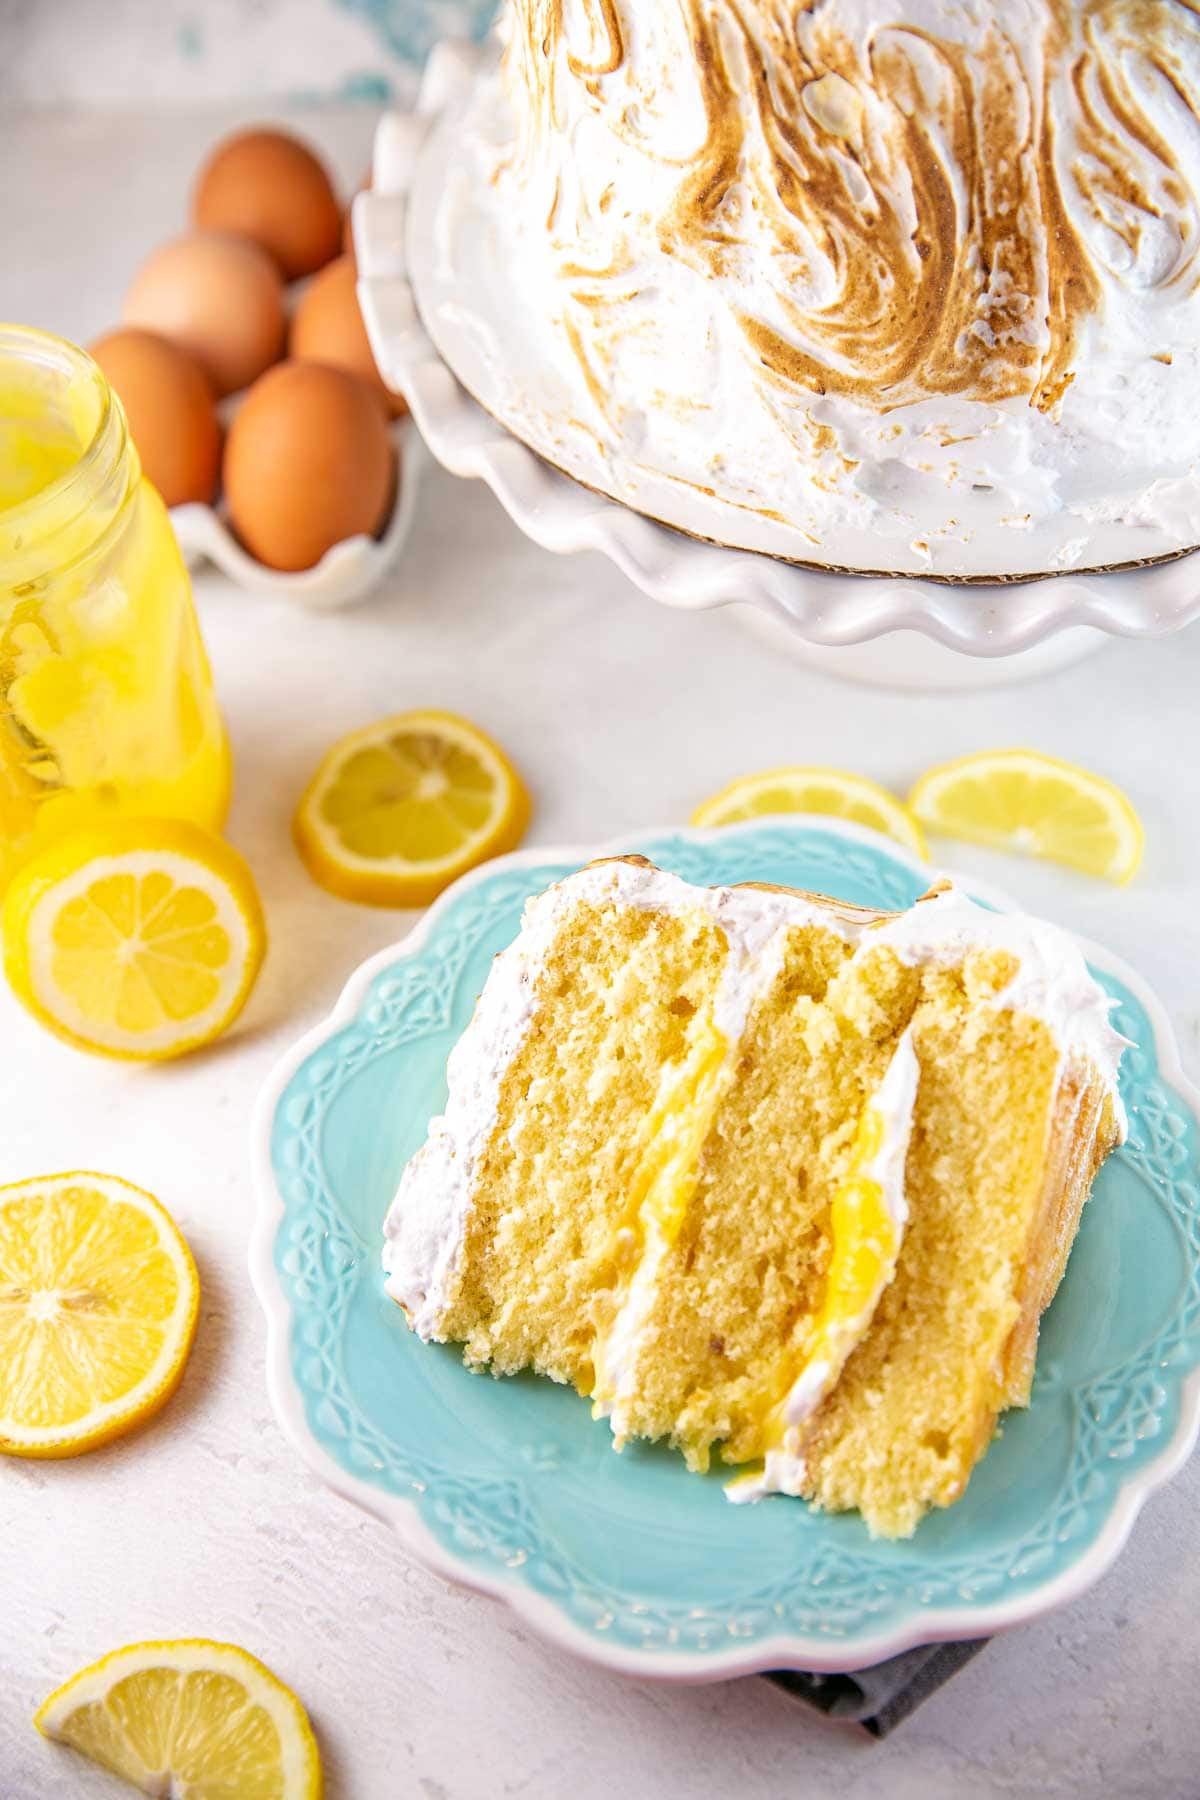 slice of lemon meringue cake on its side with lemon curd filling between cake layers